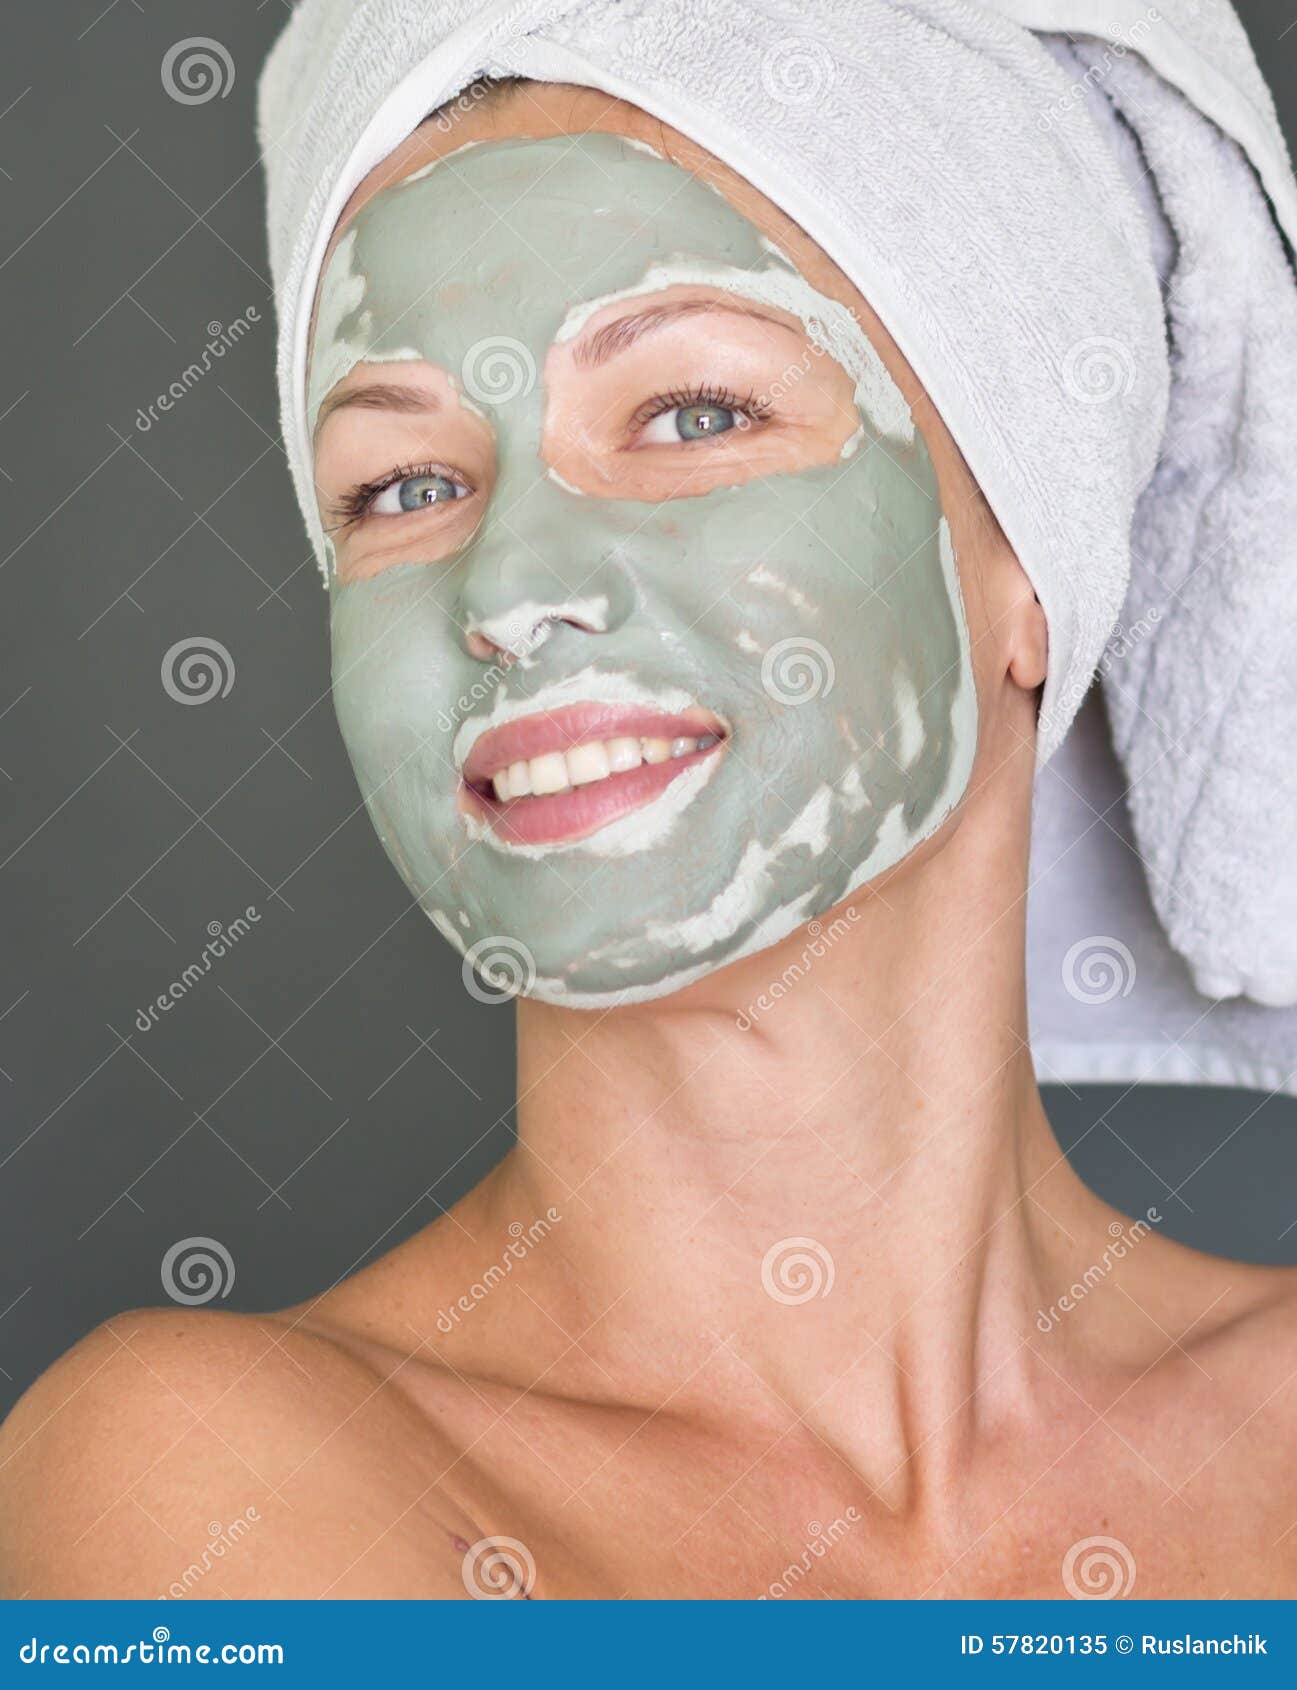 Facial Mask Beauty 106